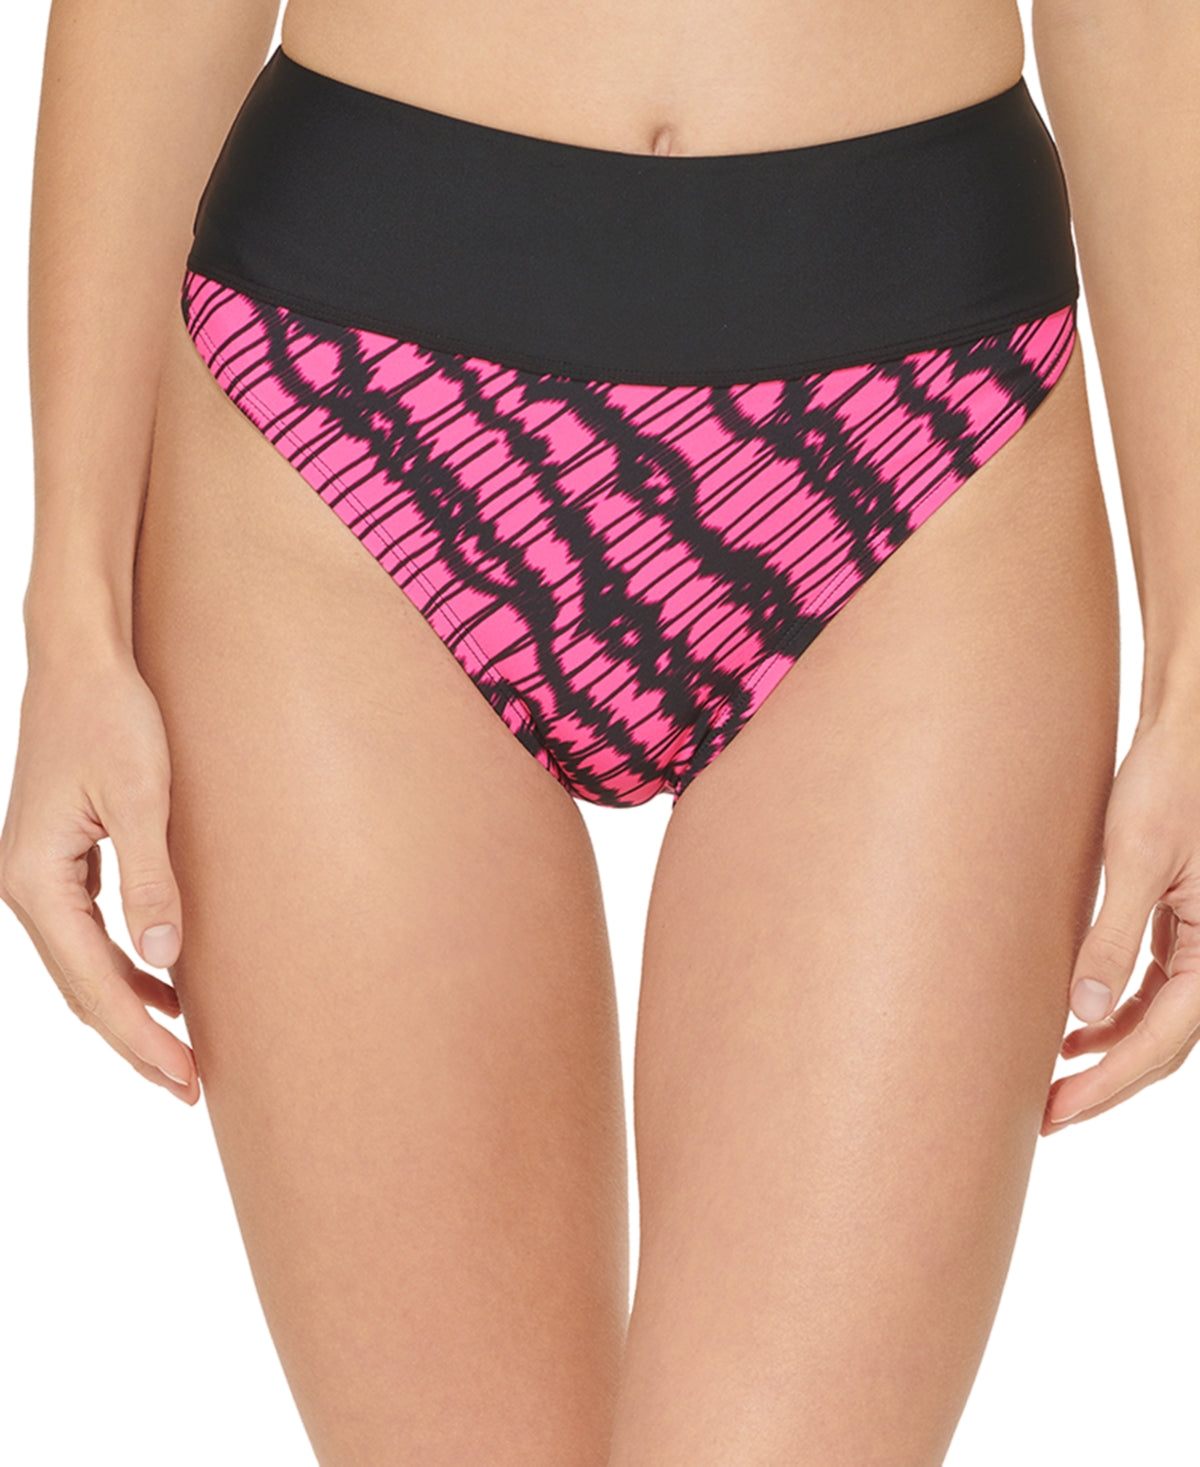 Vince Camuto Women's Zebra Classic Bikini Bottom at